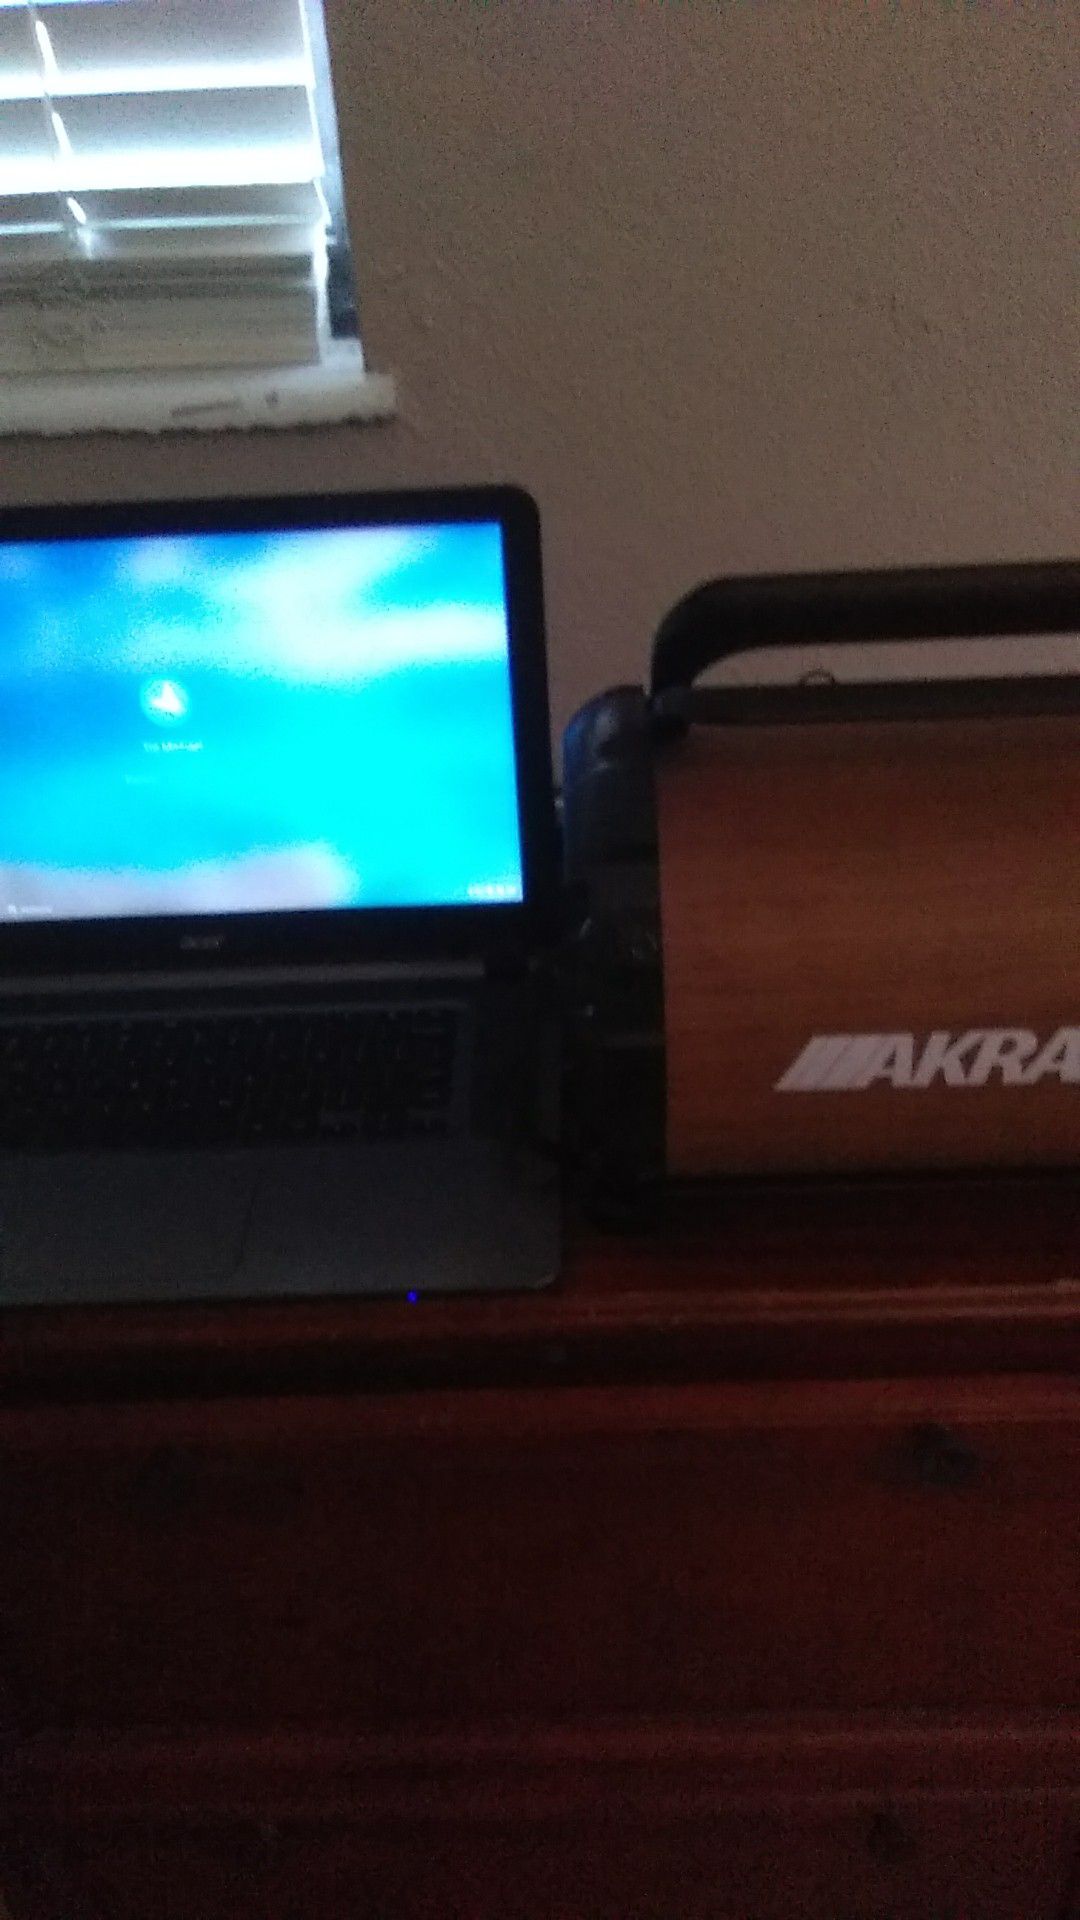 Laptop and Bluetooth speaker